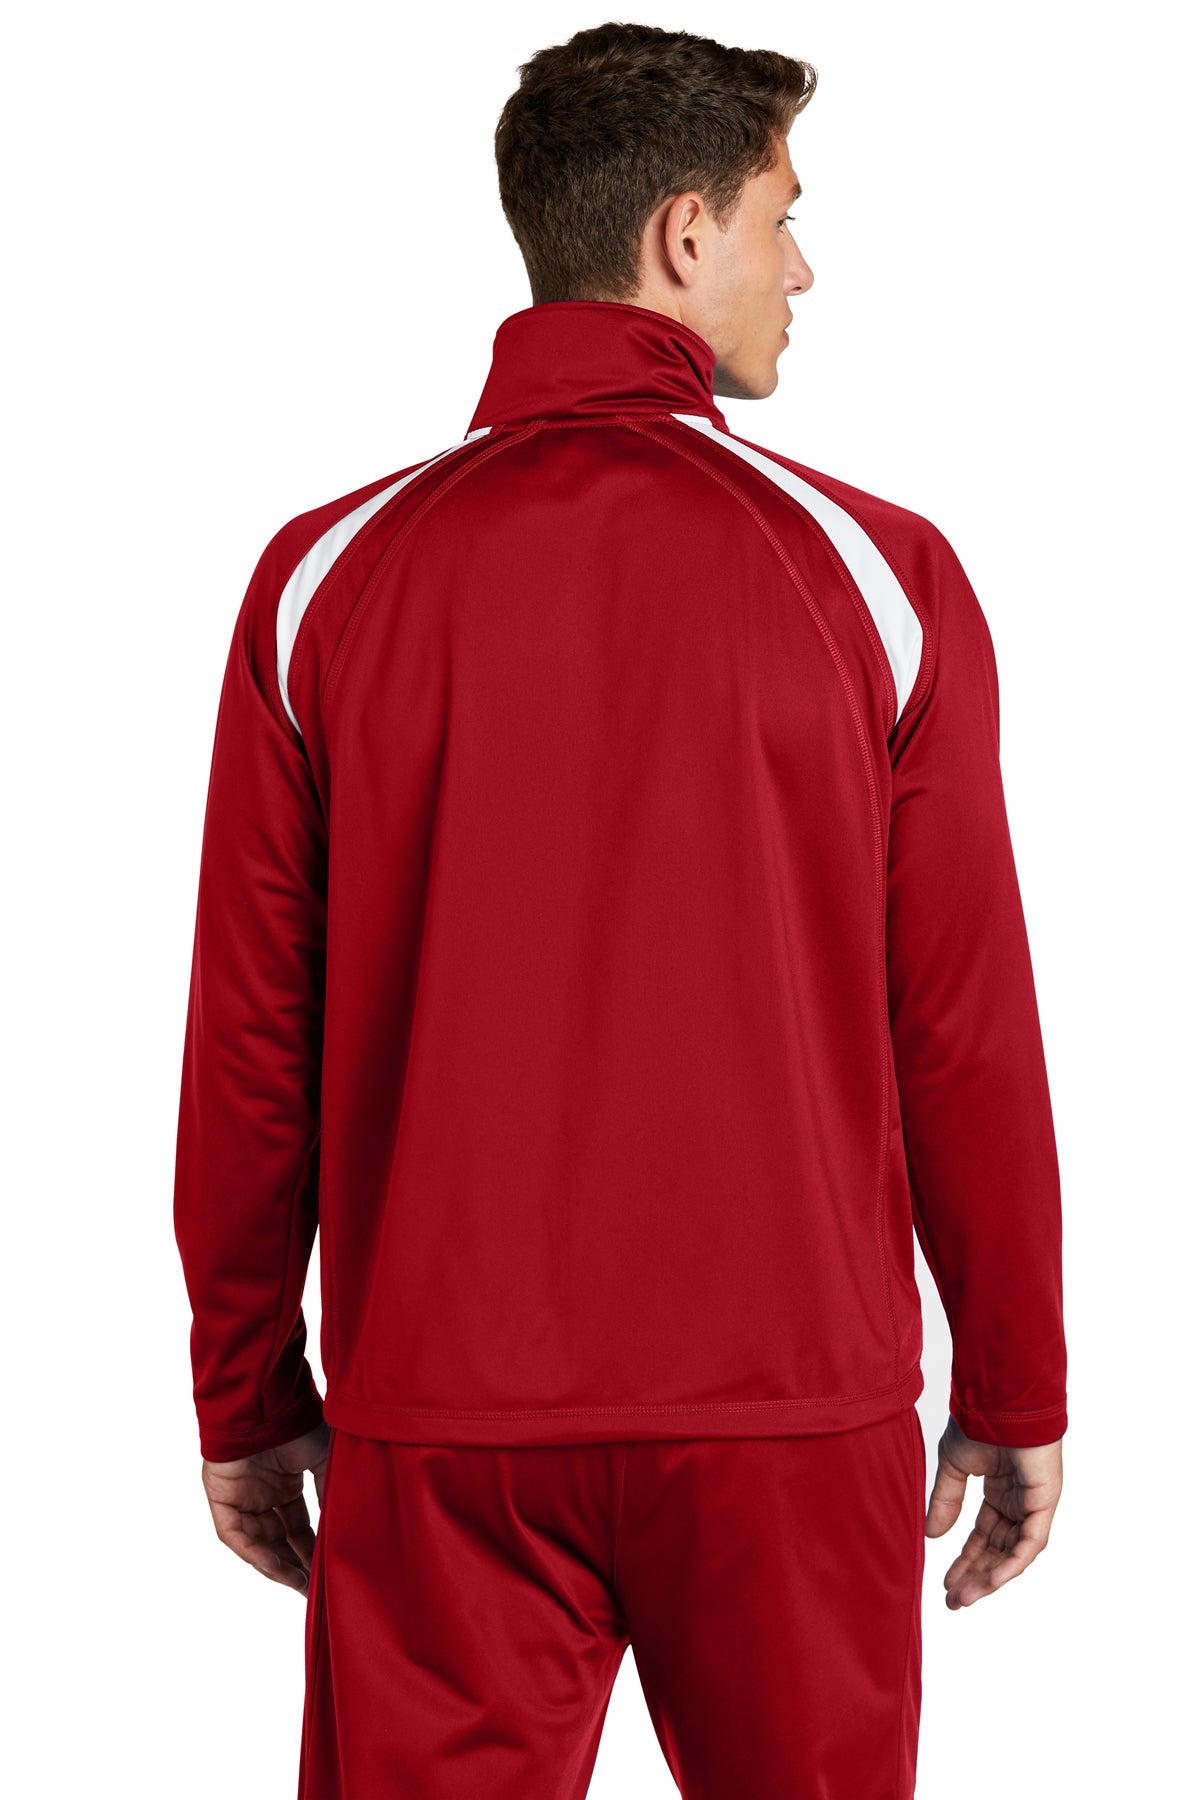 sport-tek_jst90 _true red/white_company_logo_jackets